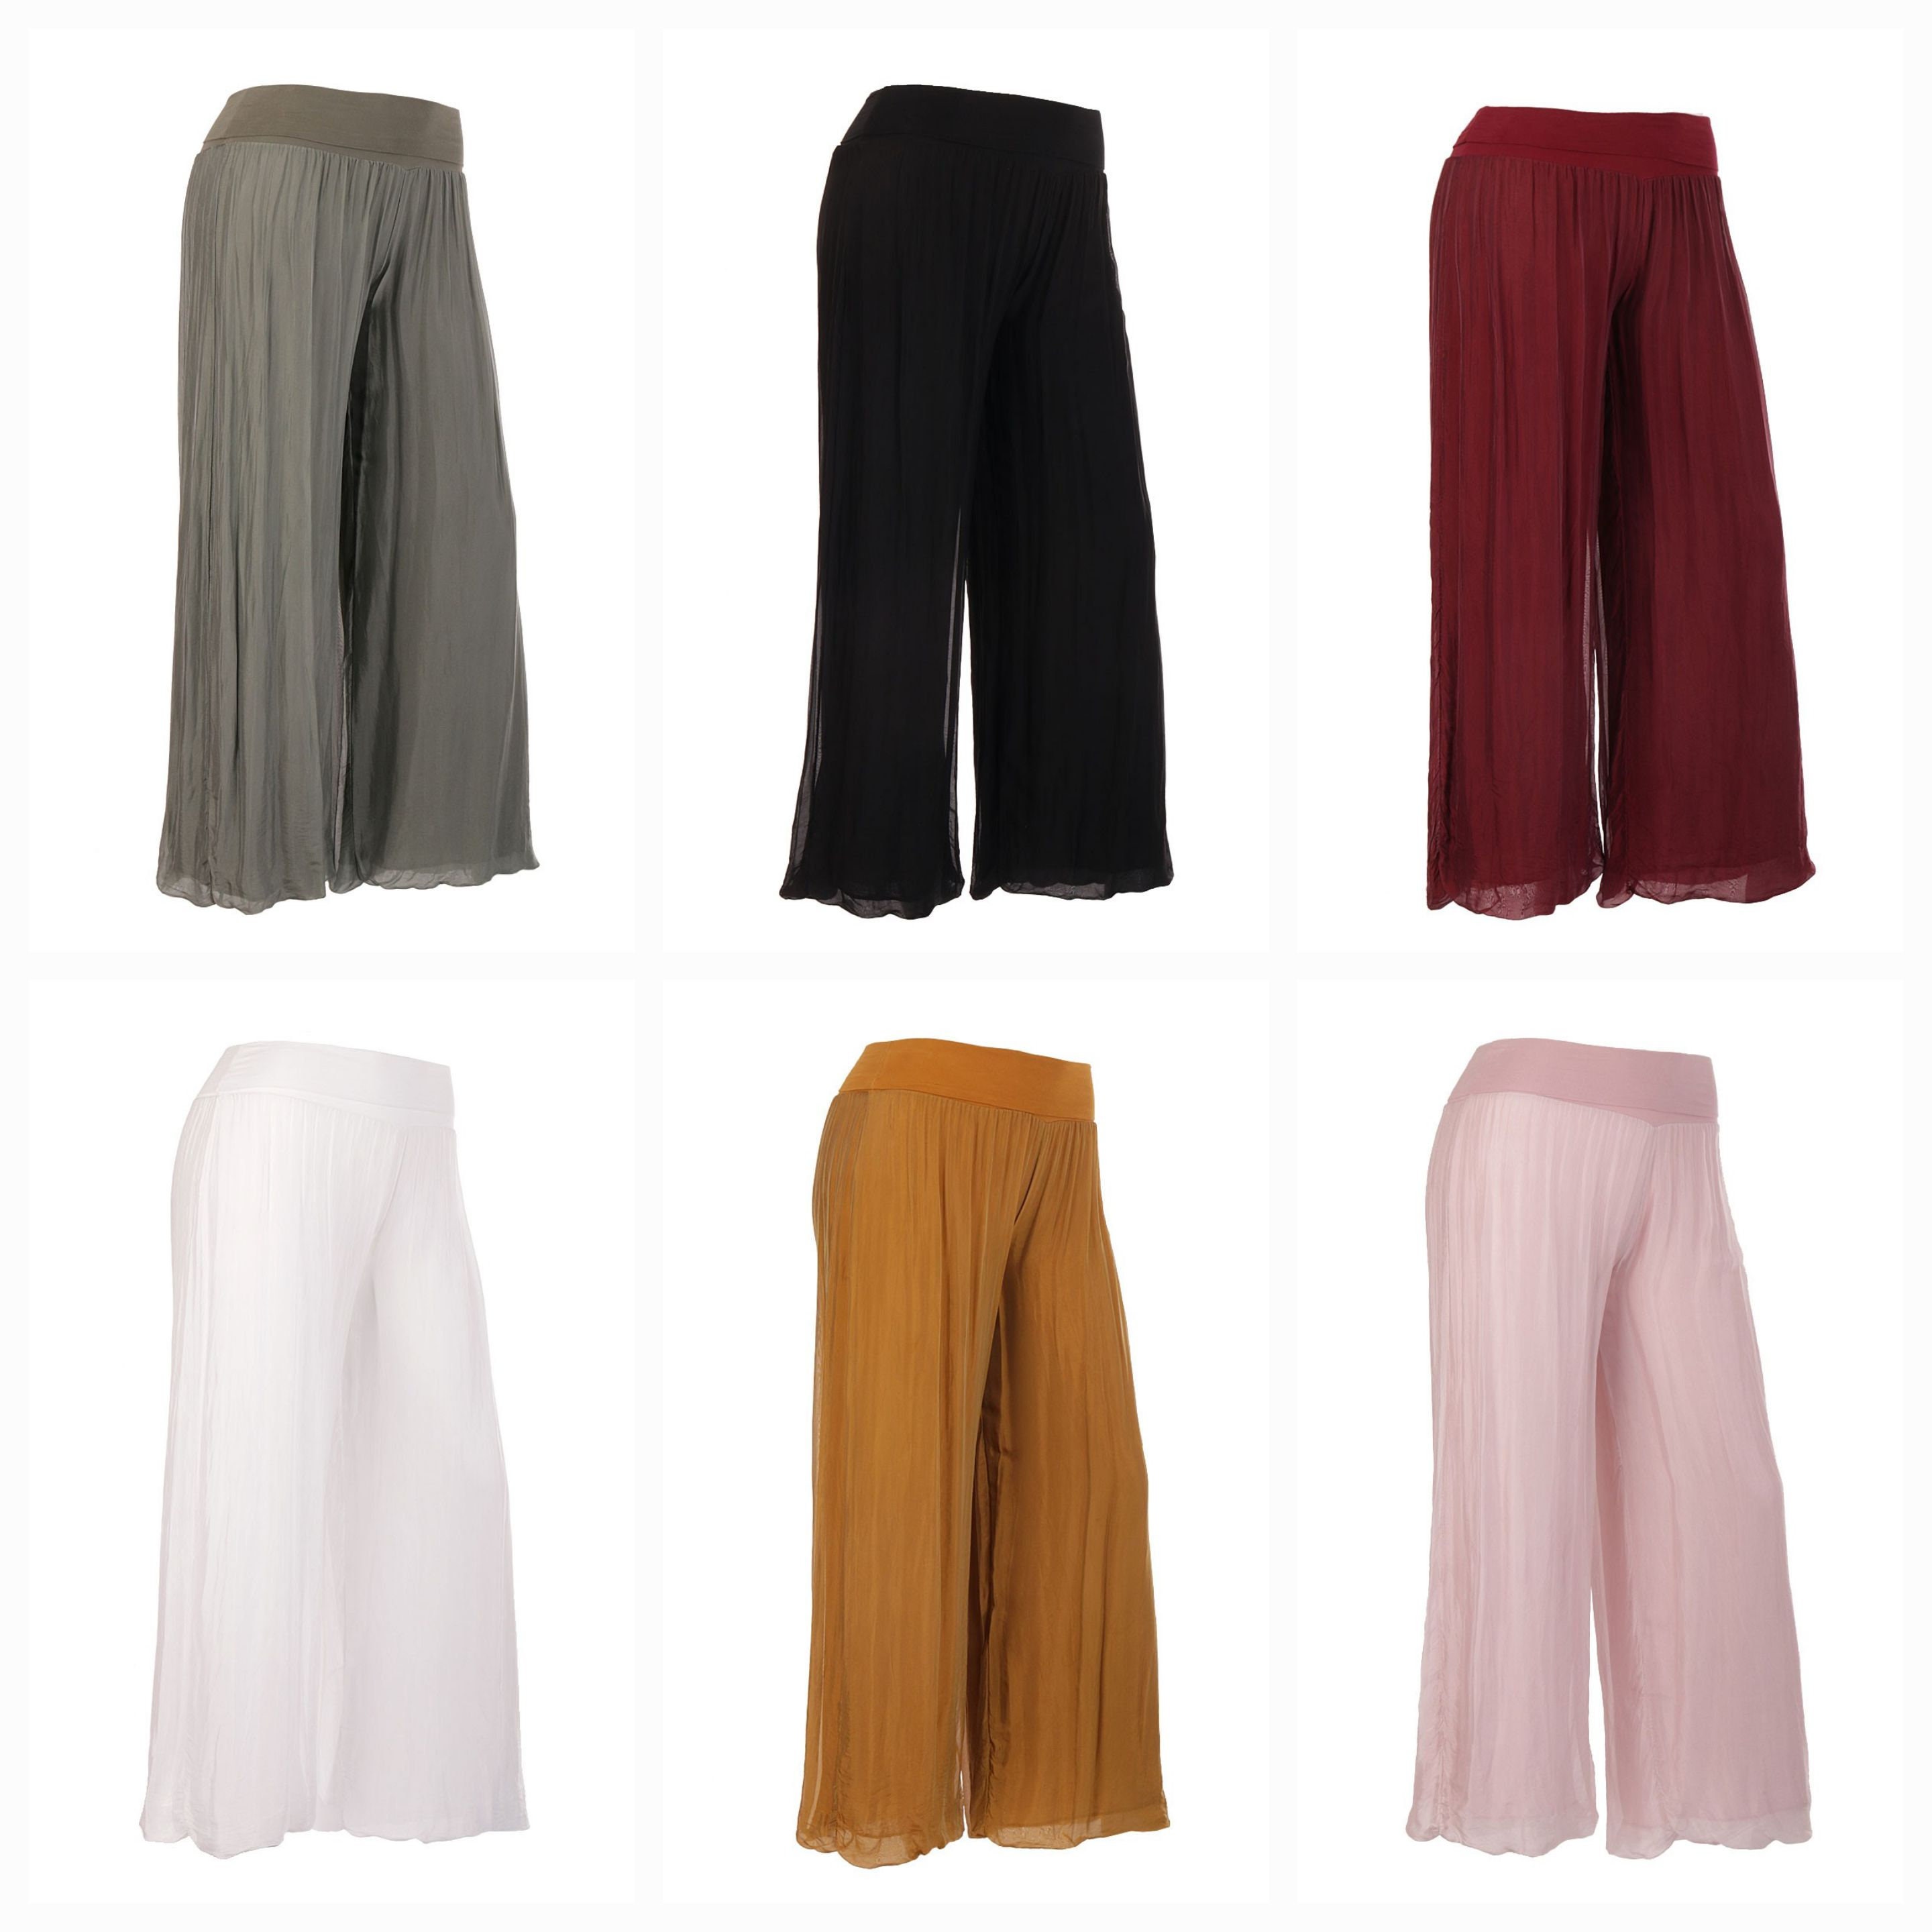 Silk Pants Silk Satin Trousers High-waisted Light Beige Silk Pants Silk  Straight-leg Pants Silk Palazzo Trousers Silk Lounge Pants 